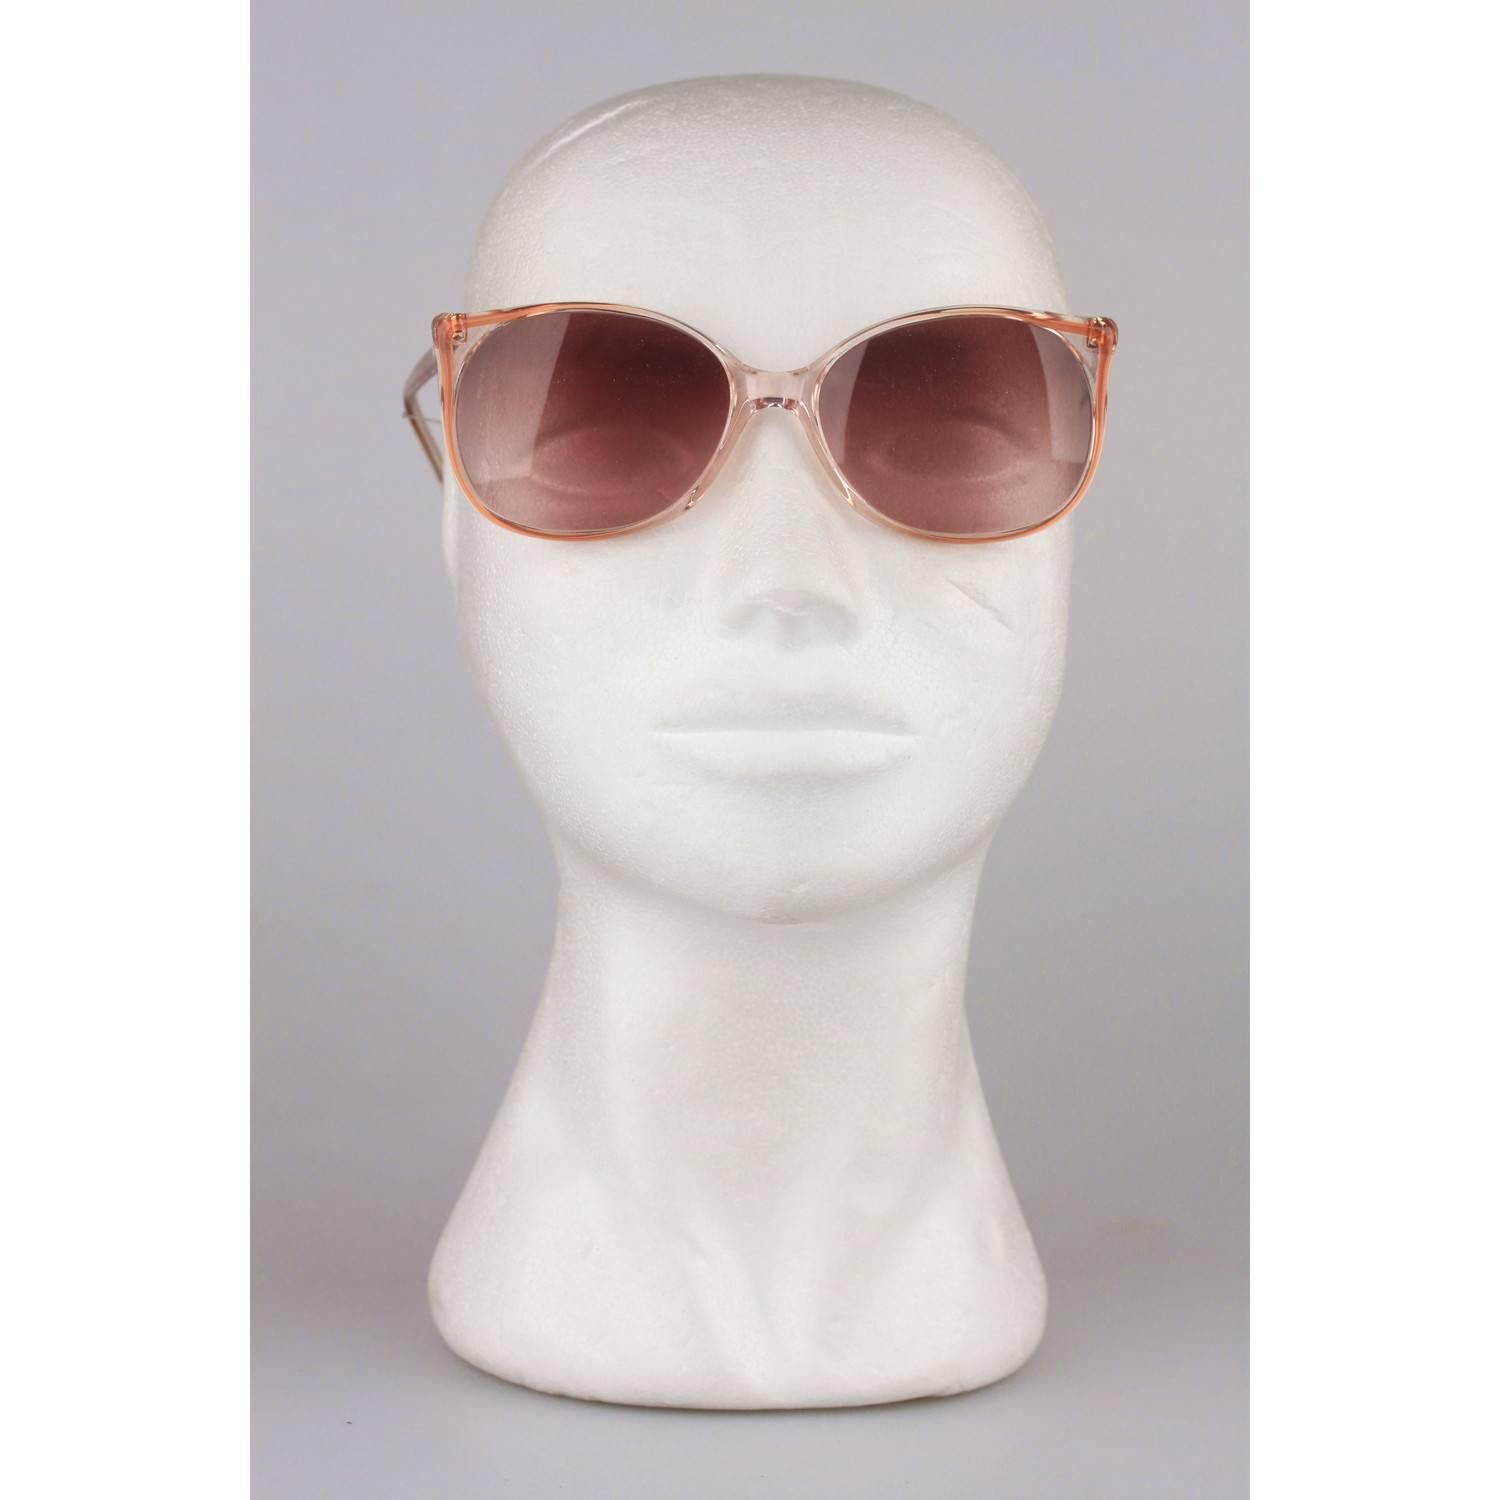 Elegant, original Vintage 1980s Sunglasses by YVES SAINT LAURENT
Clear, Classic Frame frame with orange - brownish finish
Frame hand made in France
Lens Color: Gradient Brown
100% UV Mint Lens
model refs: Pomone -